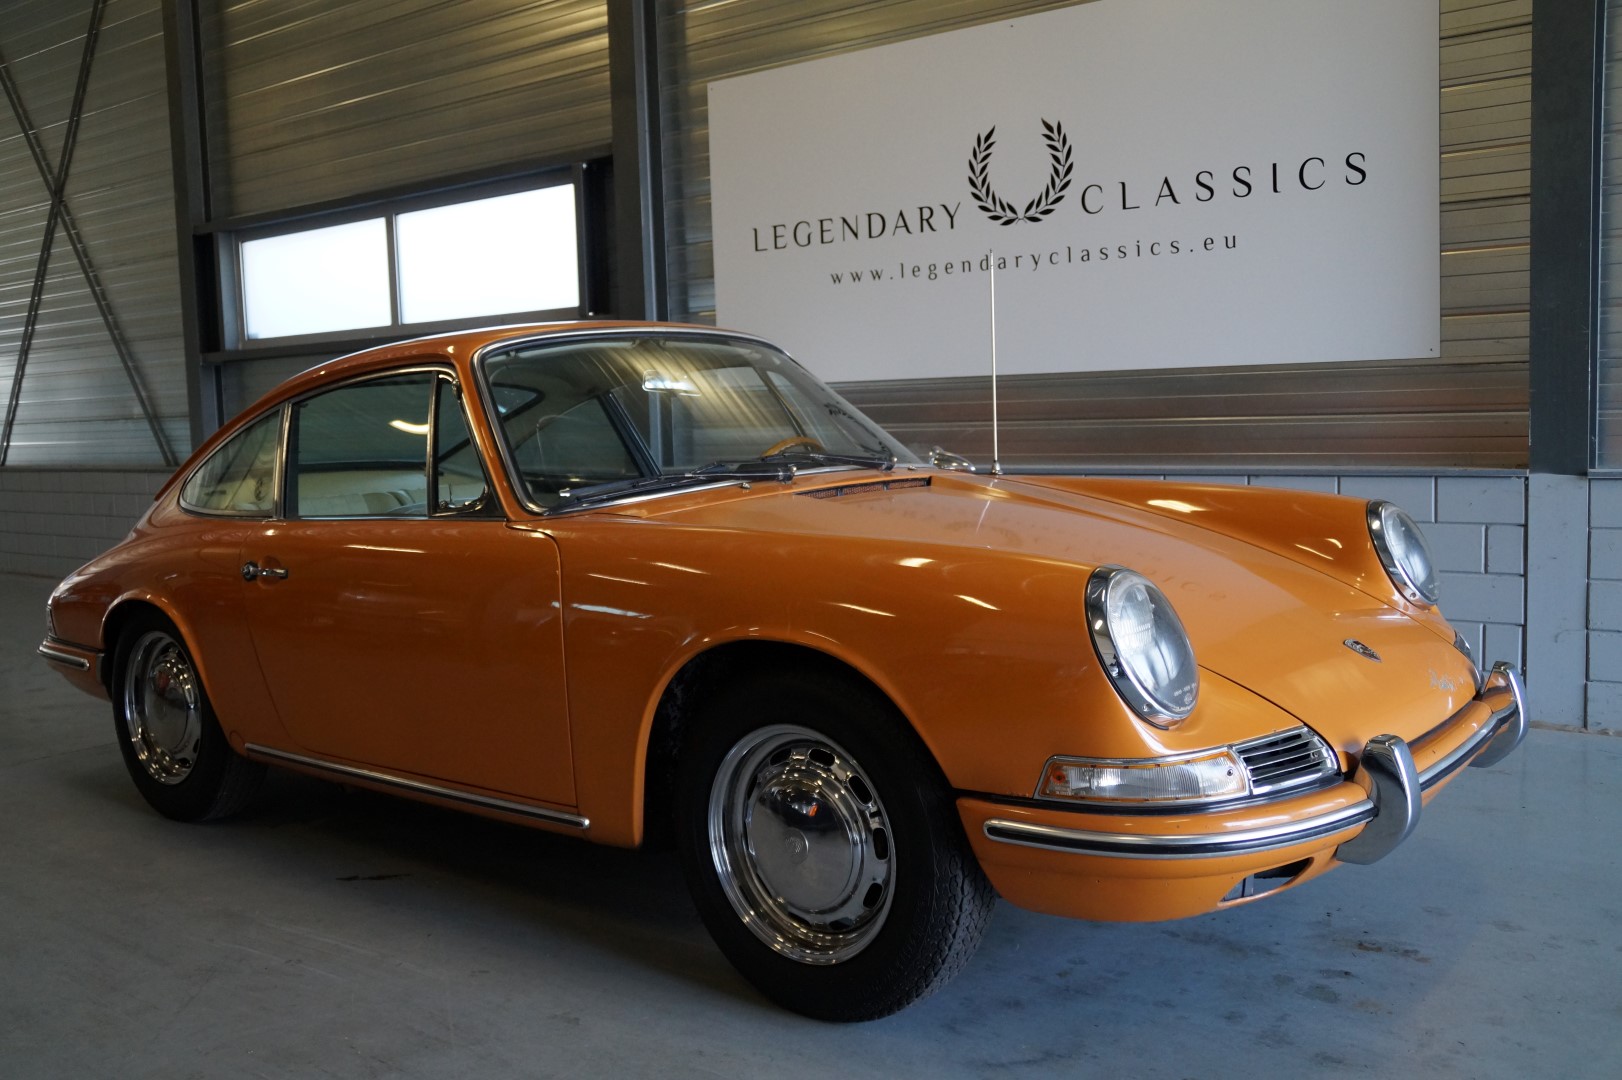 Buy this Porsche  911   at Legendary Classics